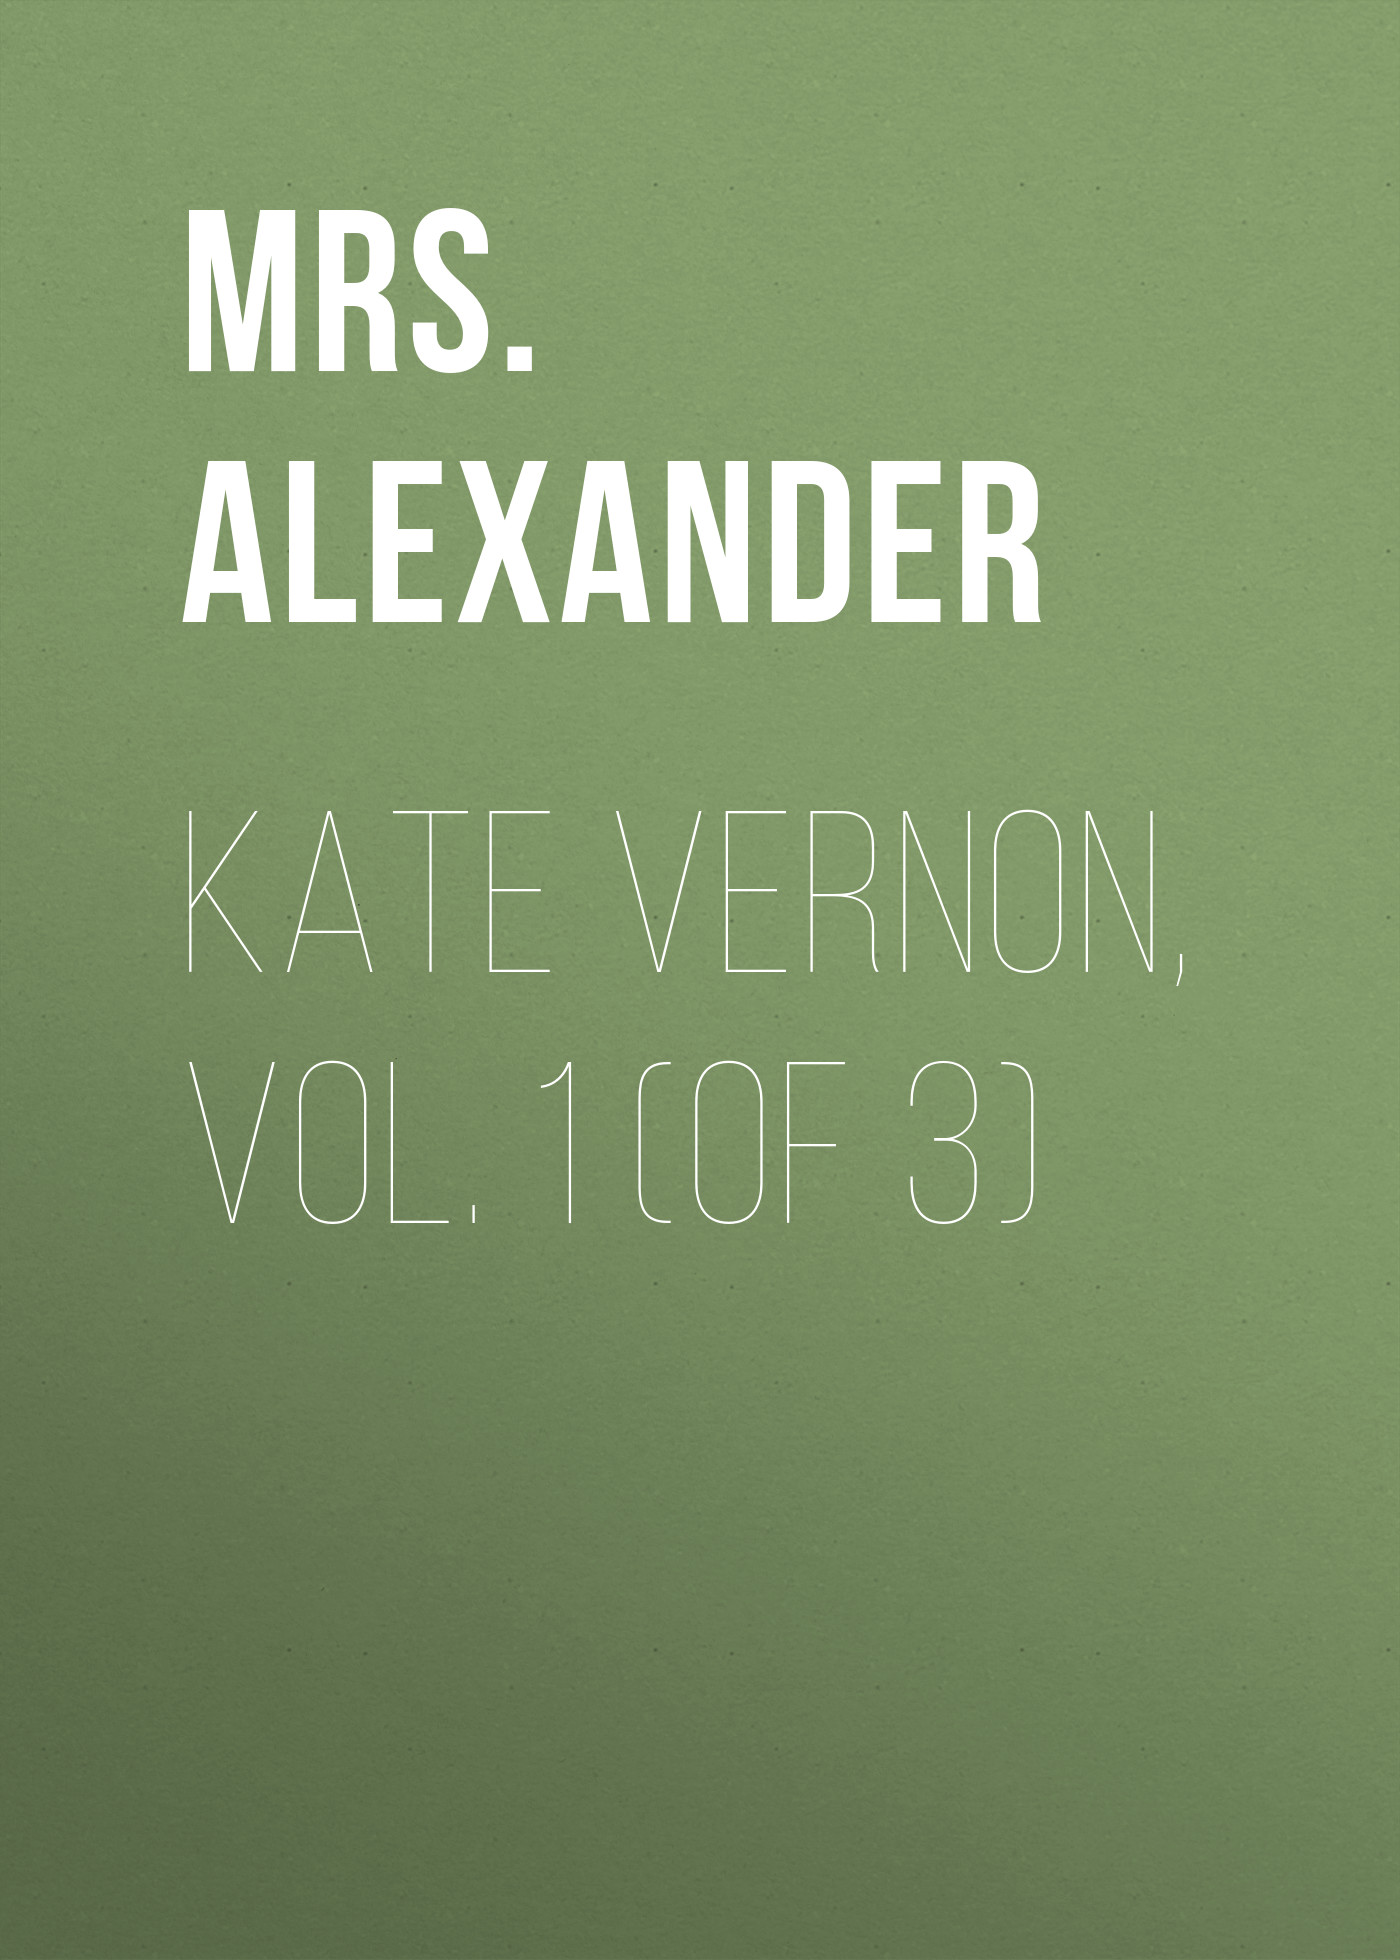 Kate Vernon, Vol. 1 (of 3)